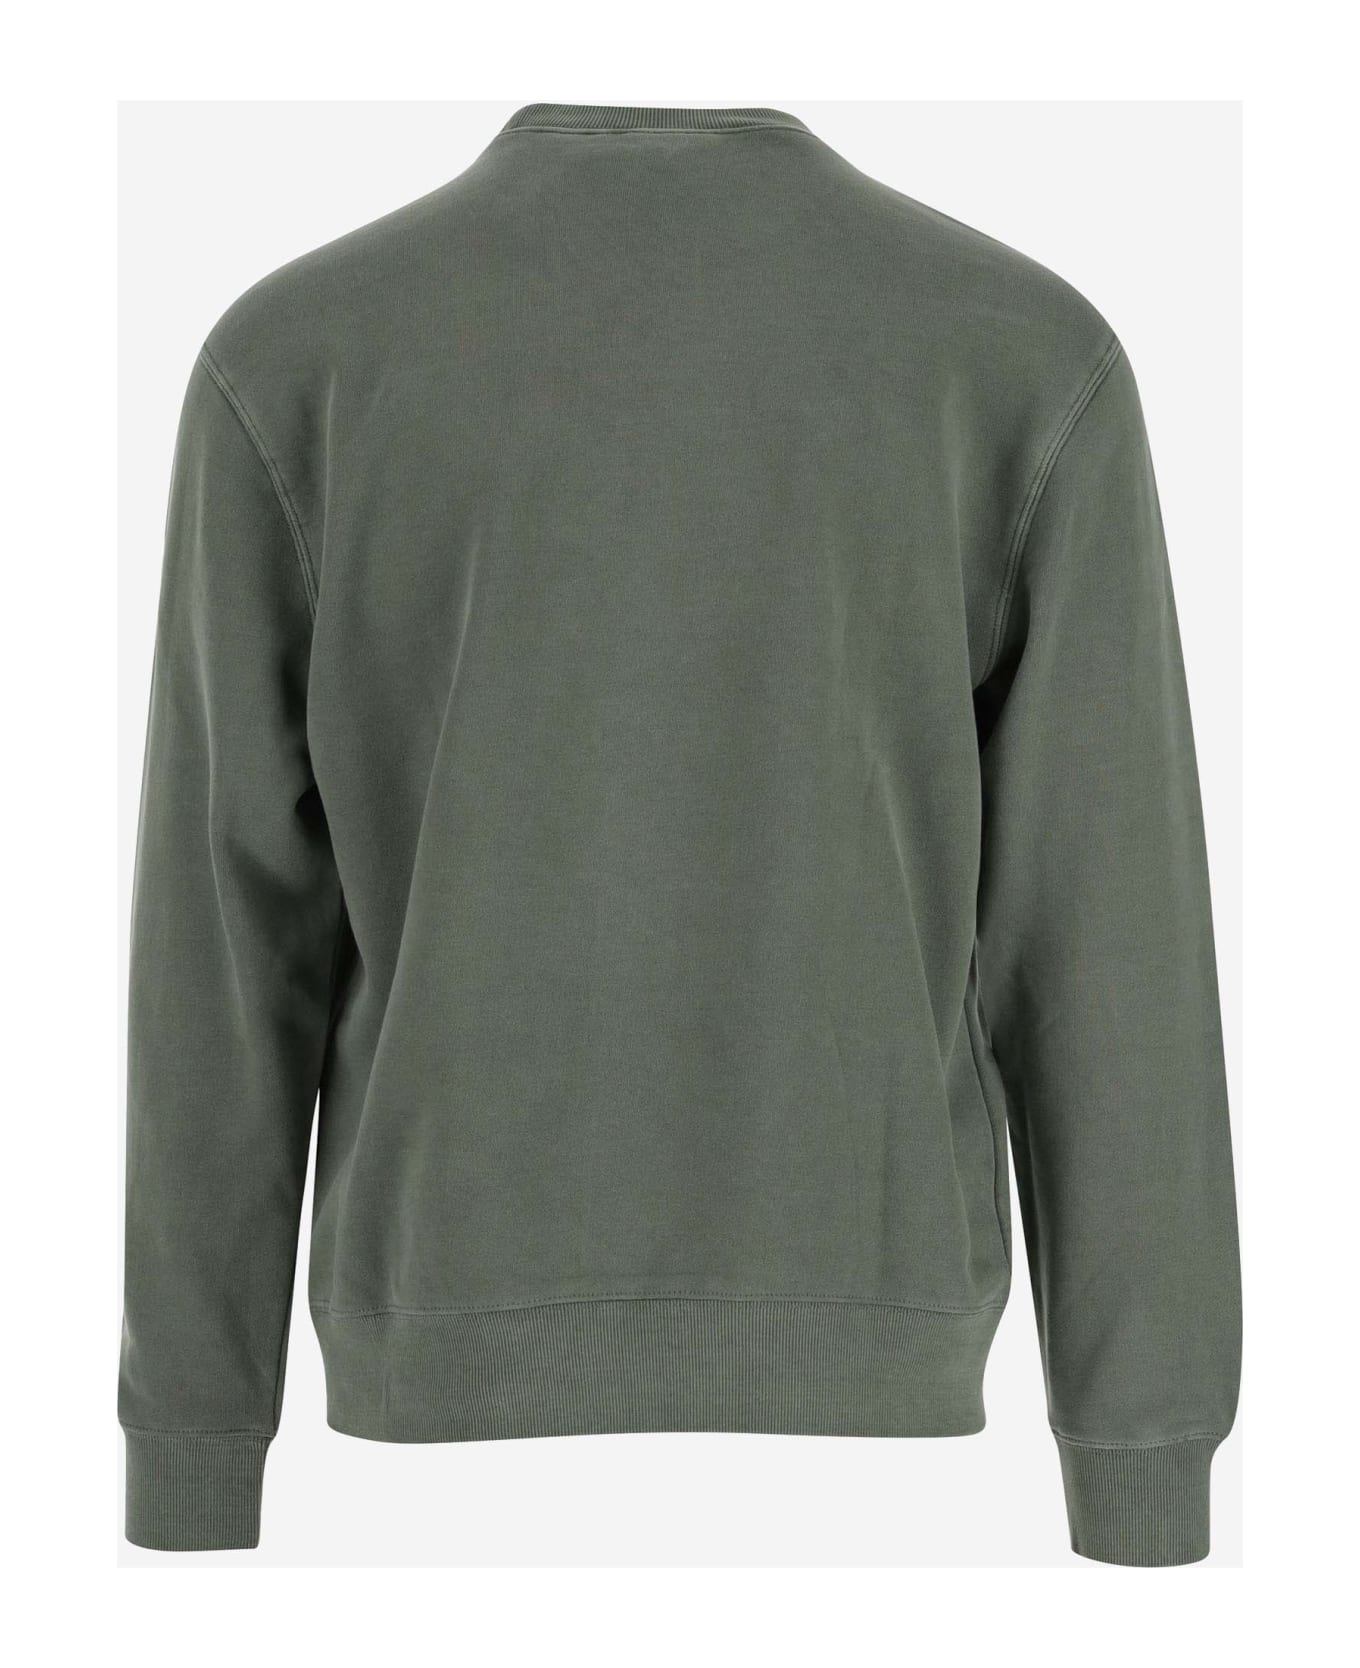 Carhartt Cotton Sweatshirt - Green